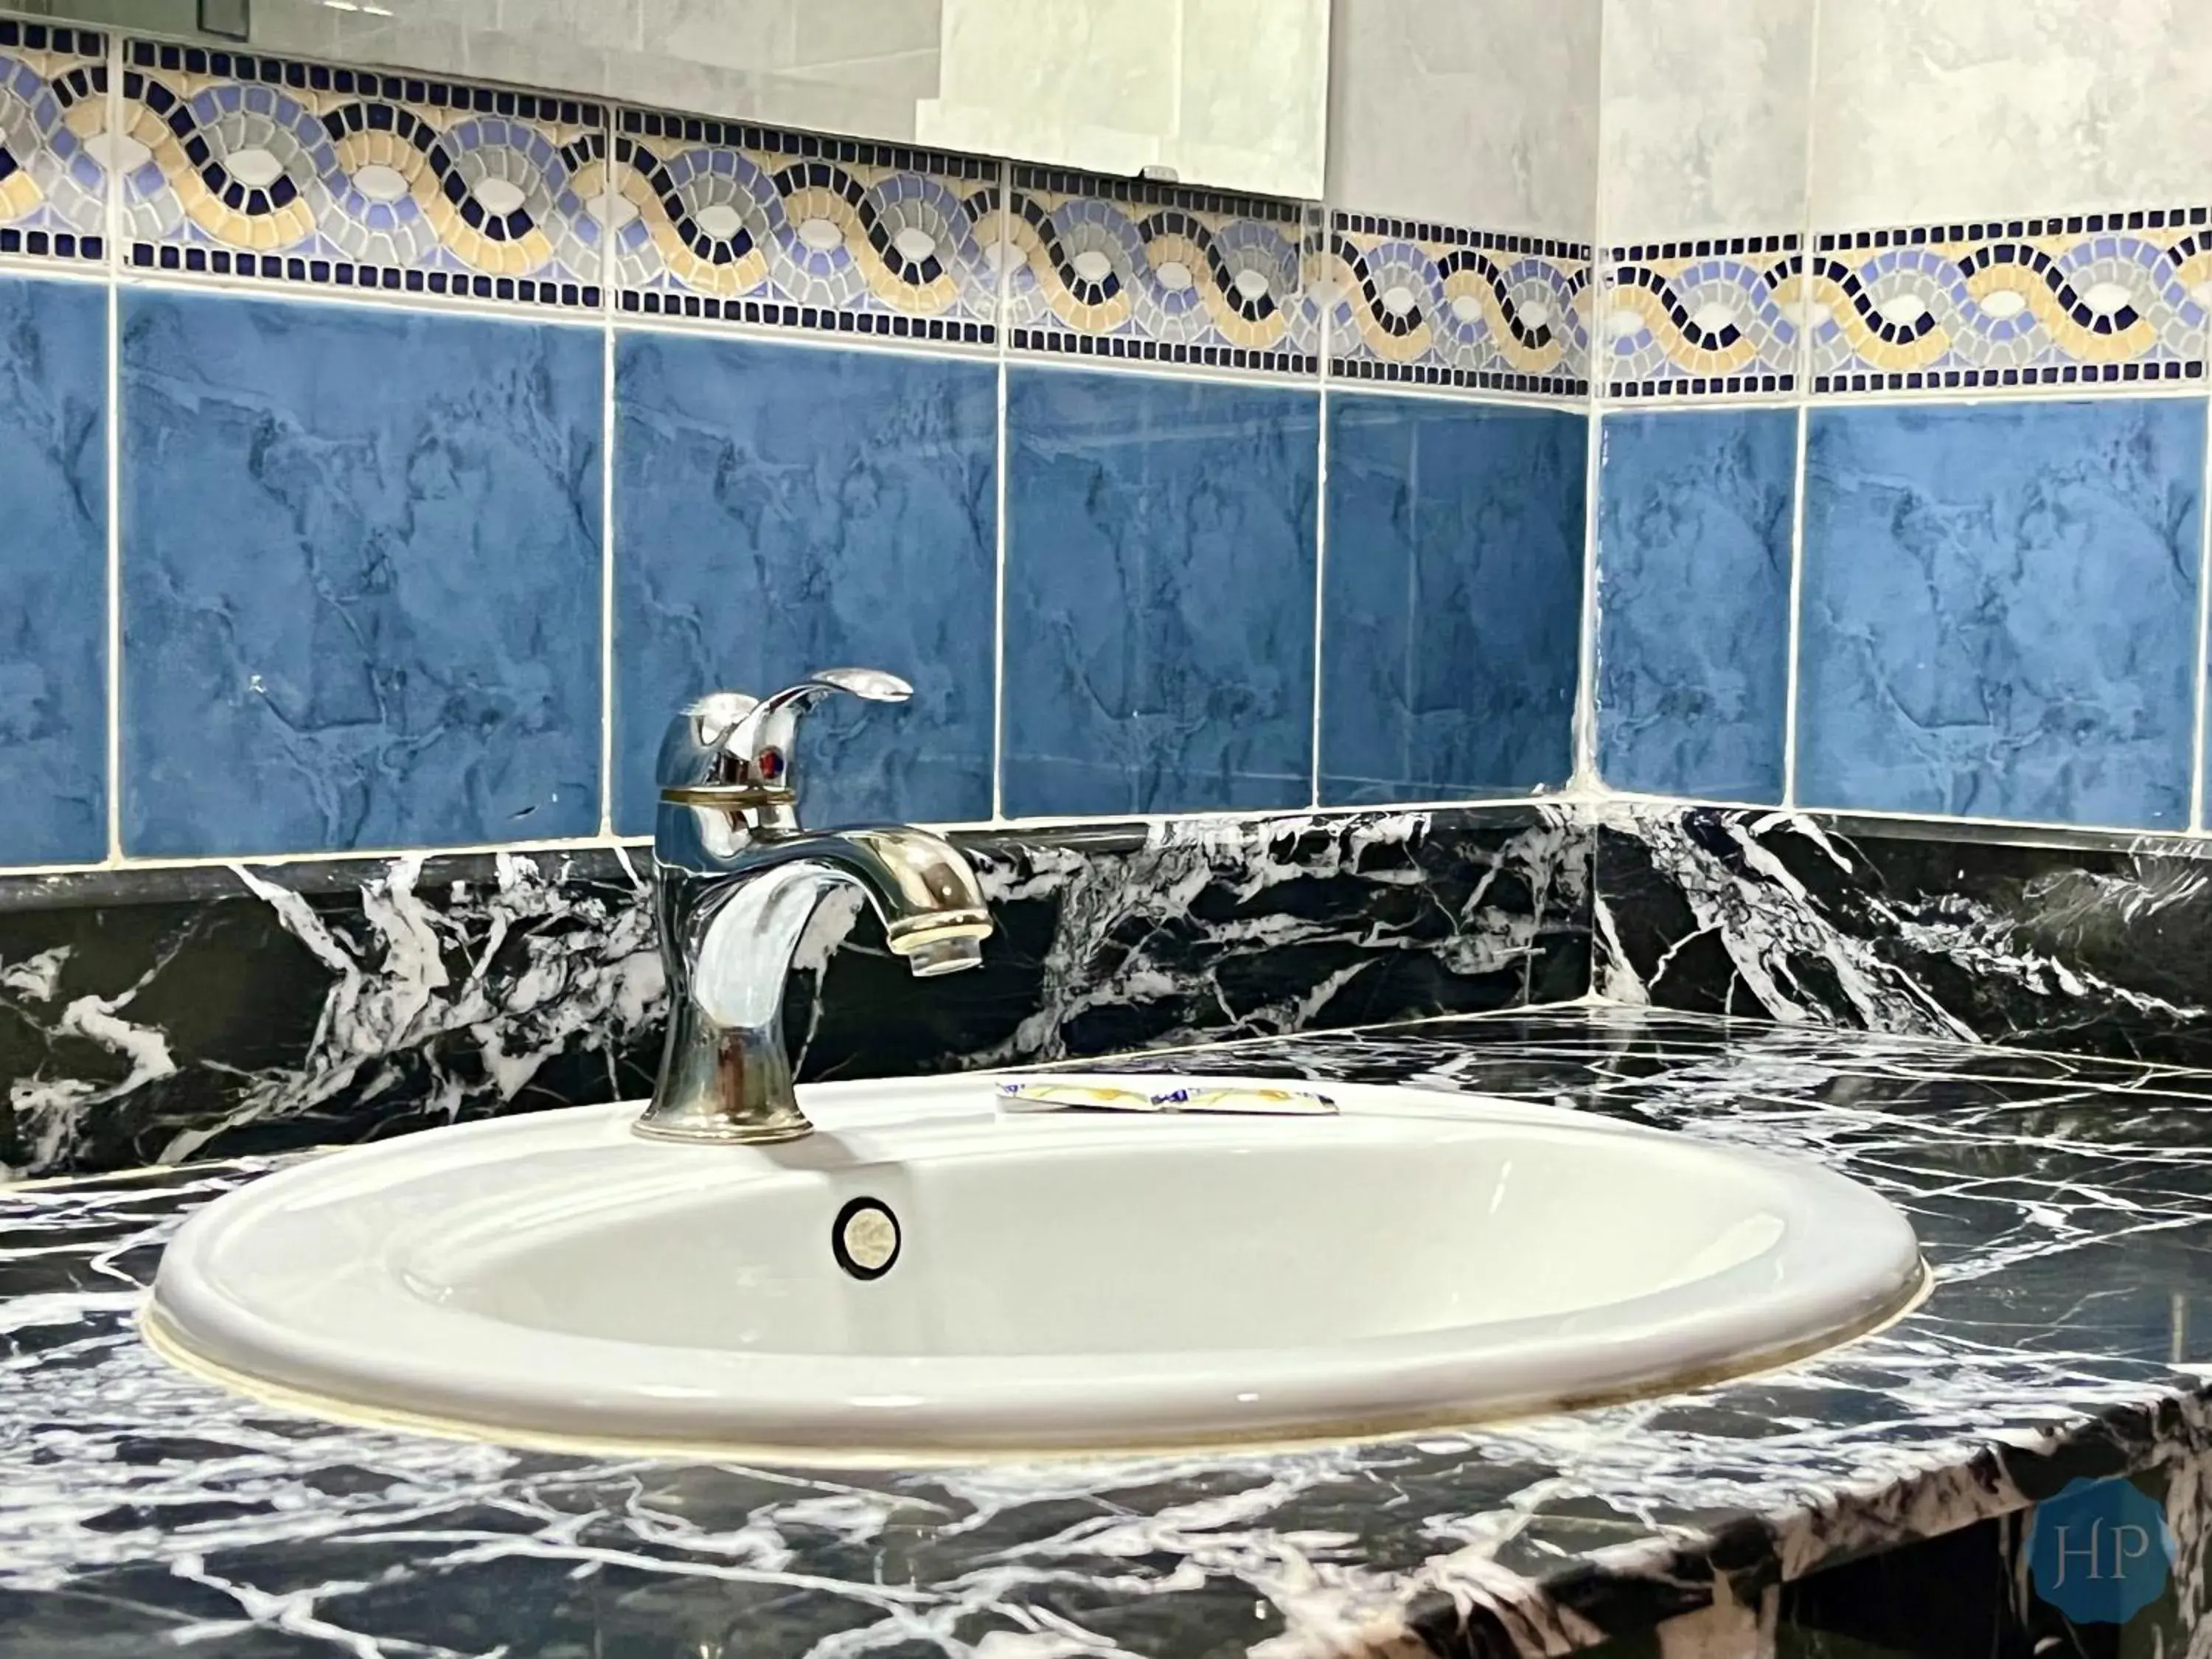 Bathroom in Hôtel Plaisance